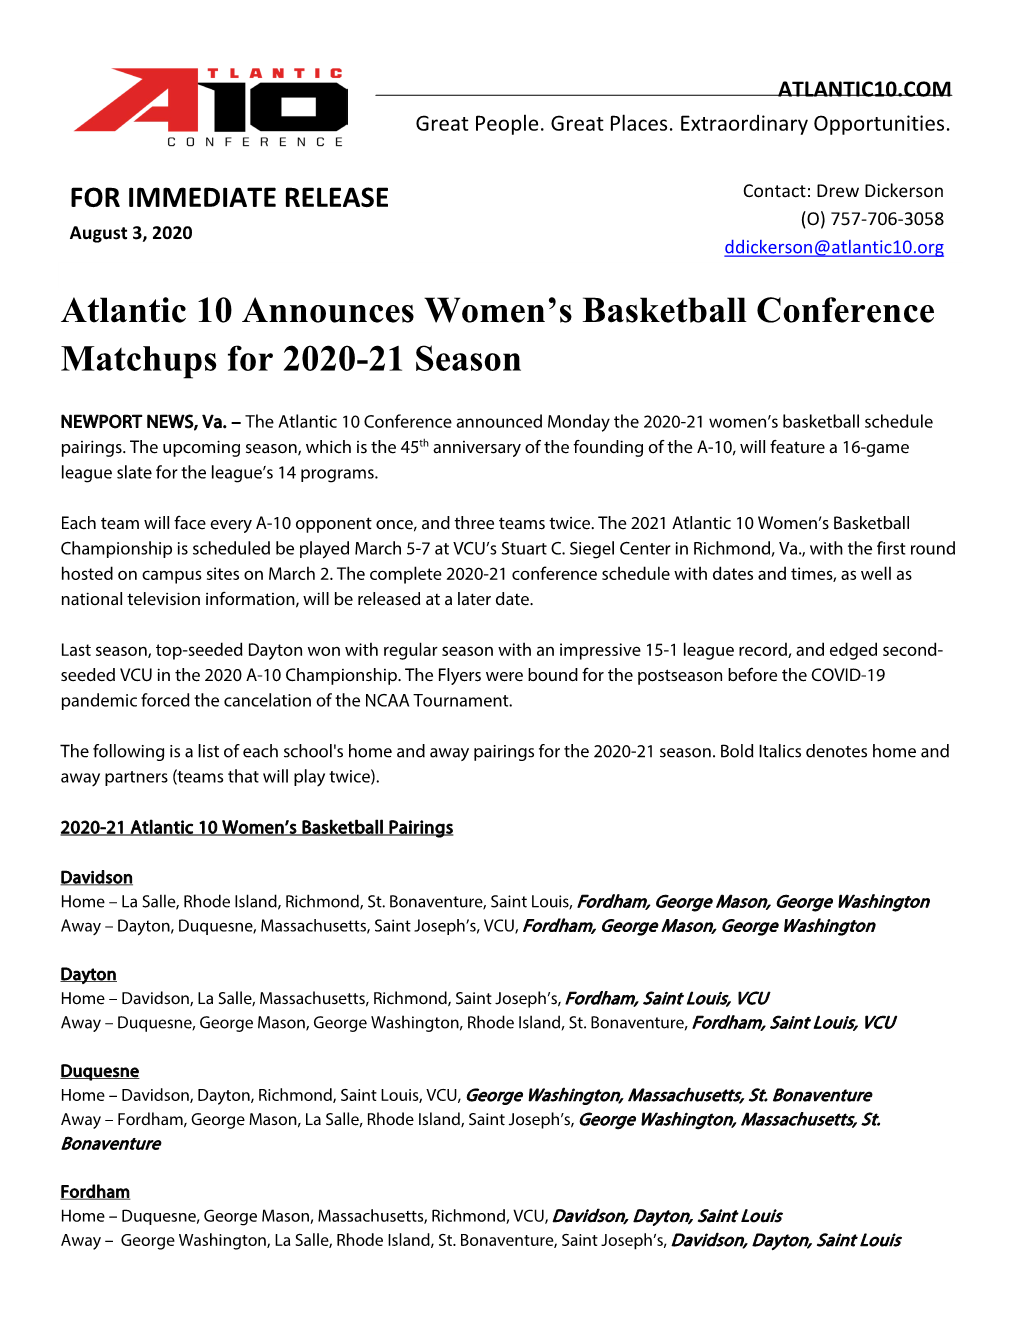 Atlantic 10 Announces Women's Basketball Conference Matchups